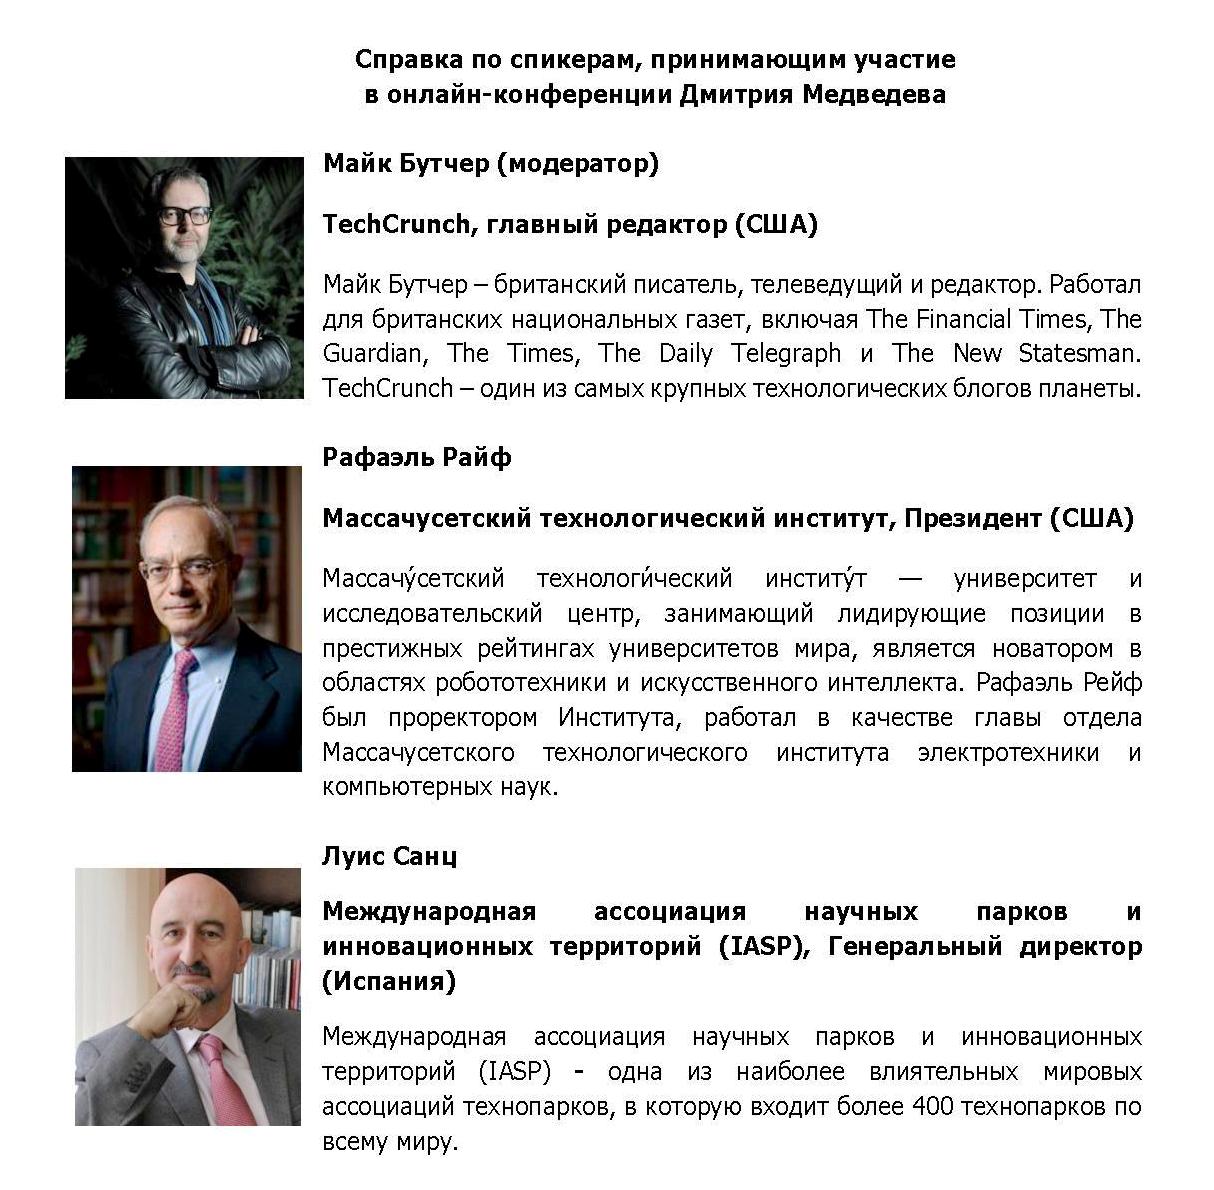  Международная онлайн-конференция Дмитрия Медведева «Технологическая революция. Повестка России» - фото 2